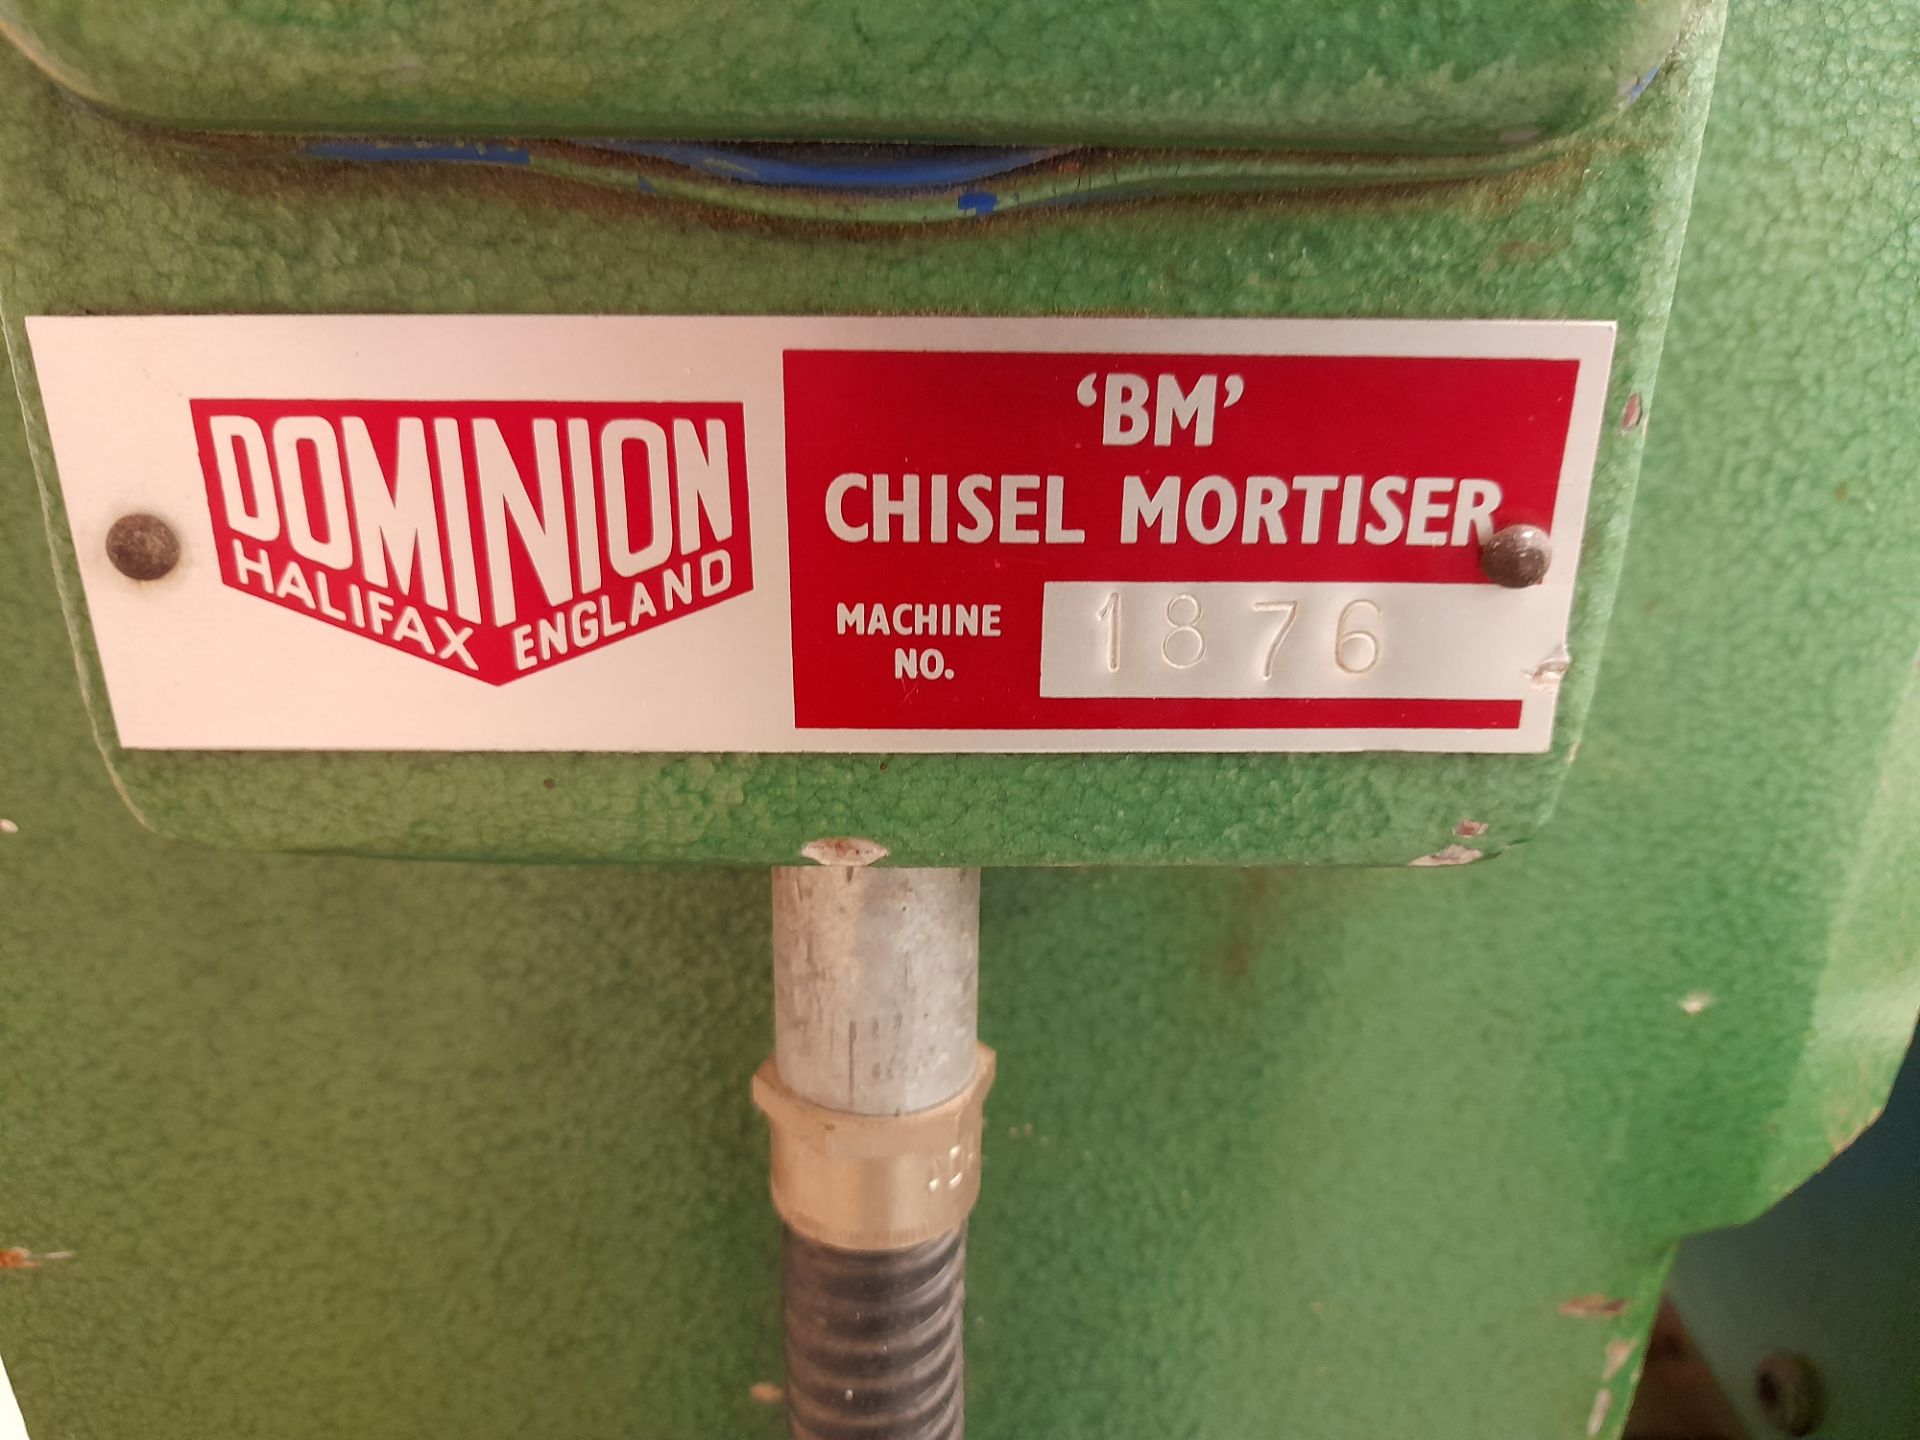 Dominon ‘BM’ Chisel Morticer (Machine Number 1876) - Image 6 of 7